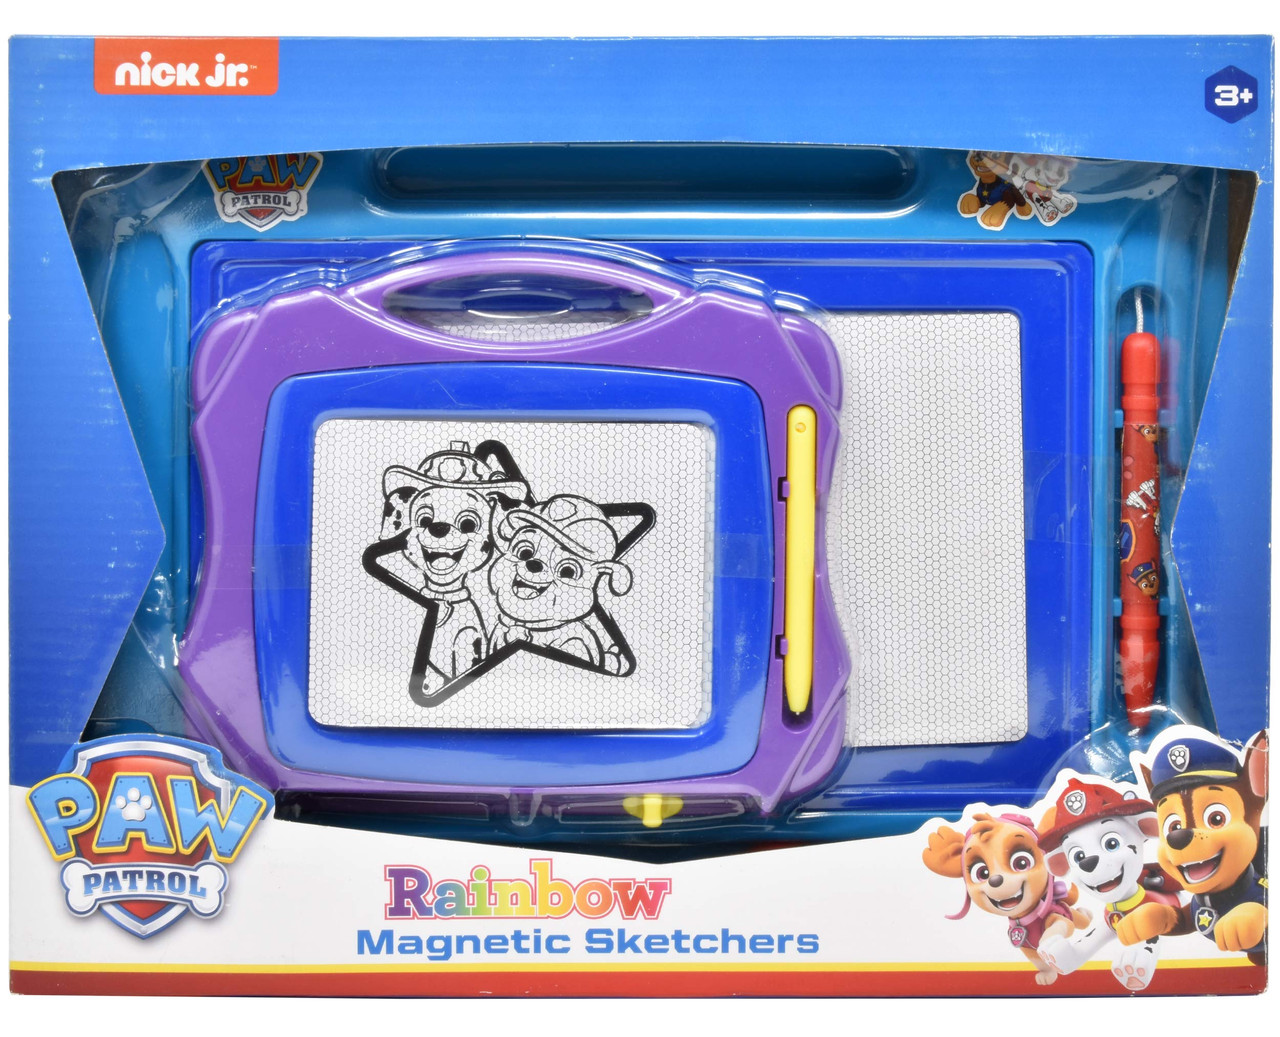 Kids Magnetic Drawing Board Large Doodle Sketch Pad Erasable Toddler Girls  Toy